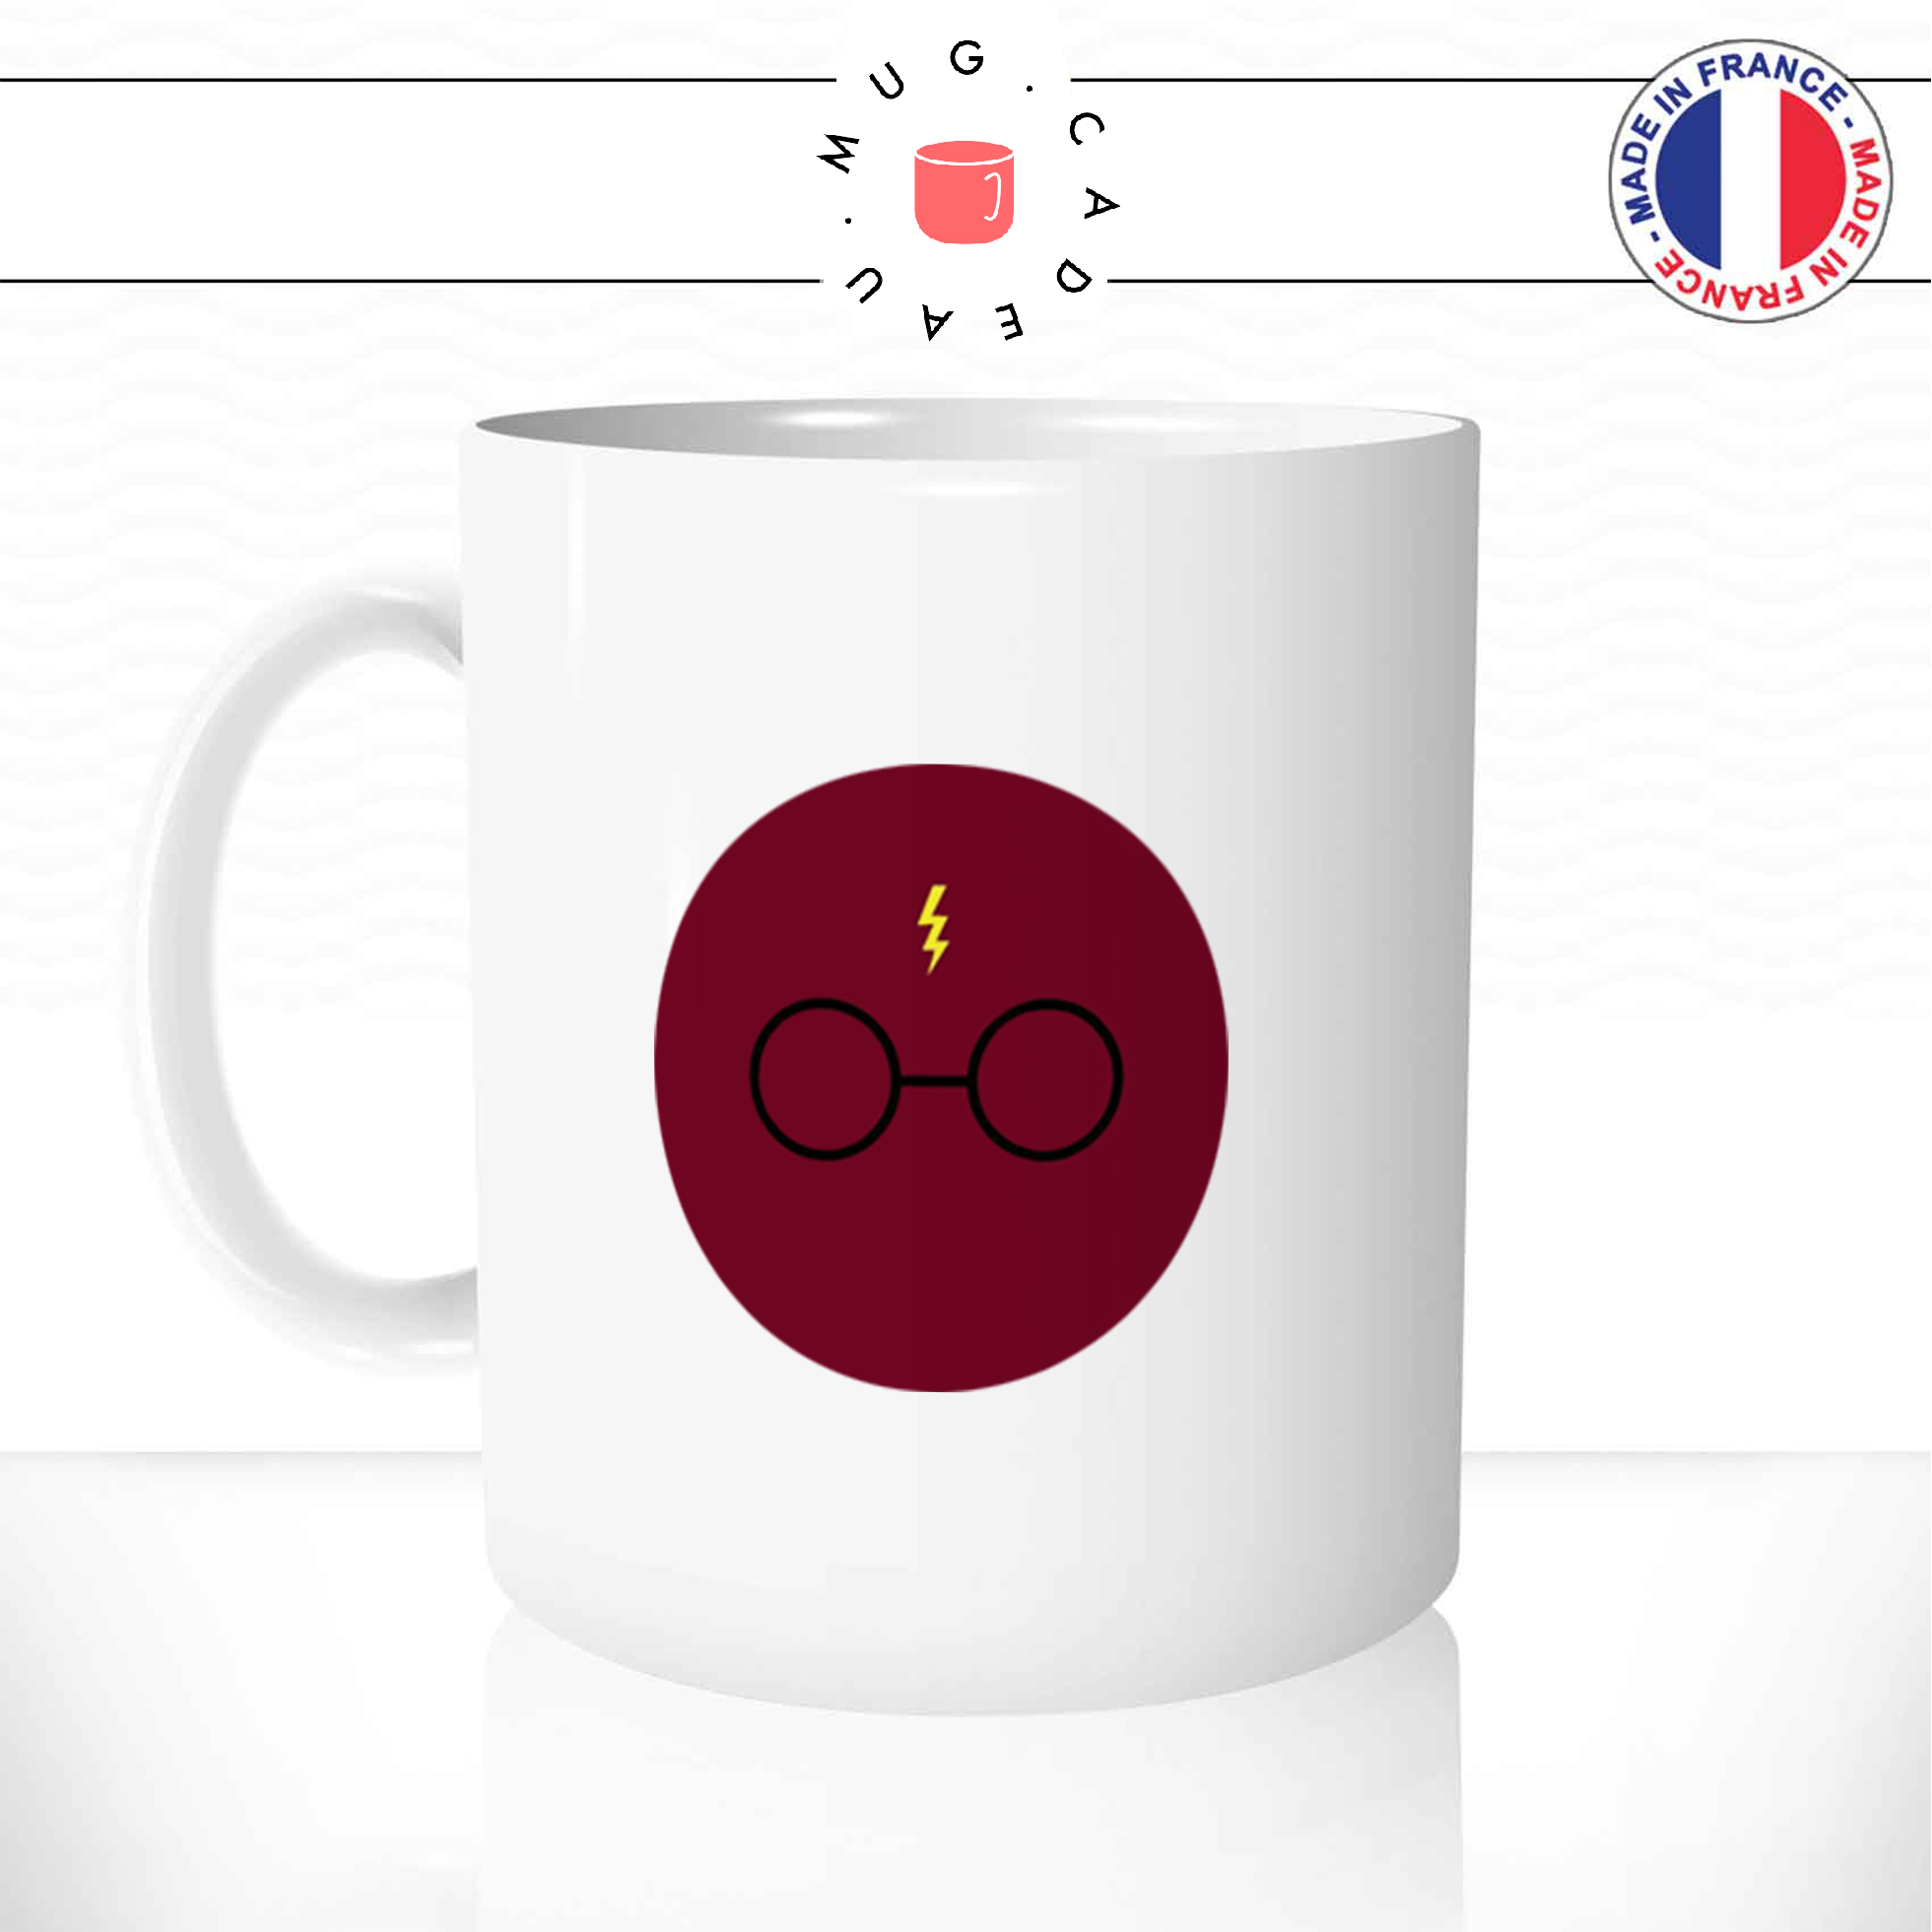 mug-tasse-ref2-harry-potter-rond-rouge-logo-lunettes-cicatrices-cafe-the-mugs-tasses-personnalise-anse-gauche